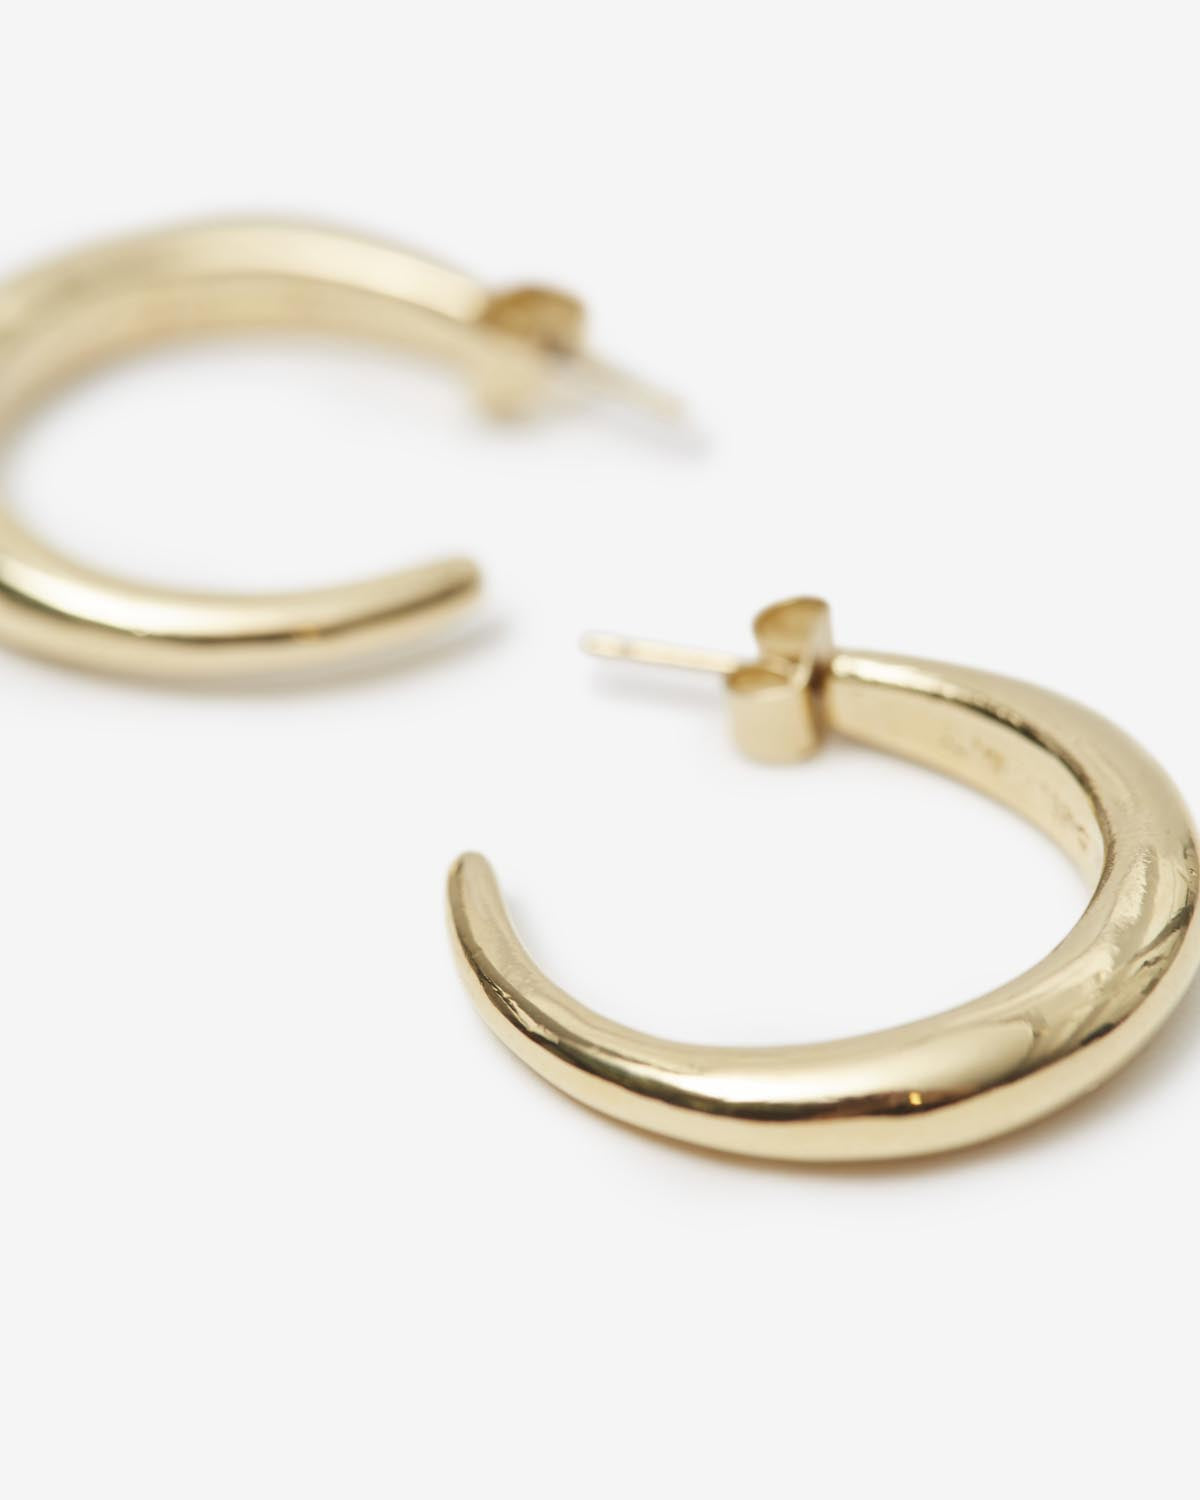 Ring earrings Woman Gold 2